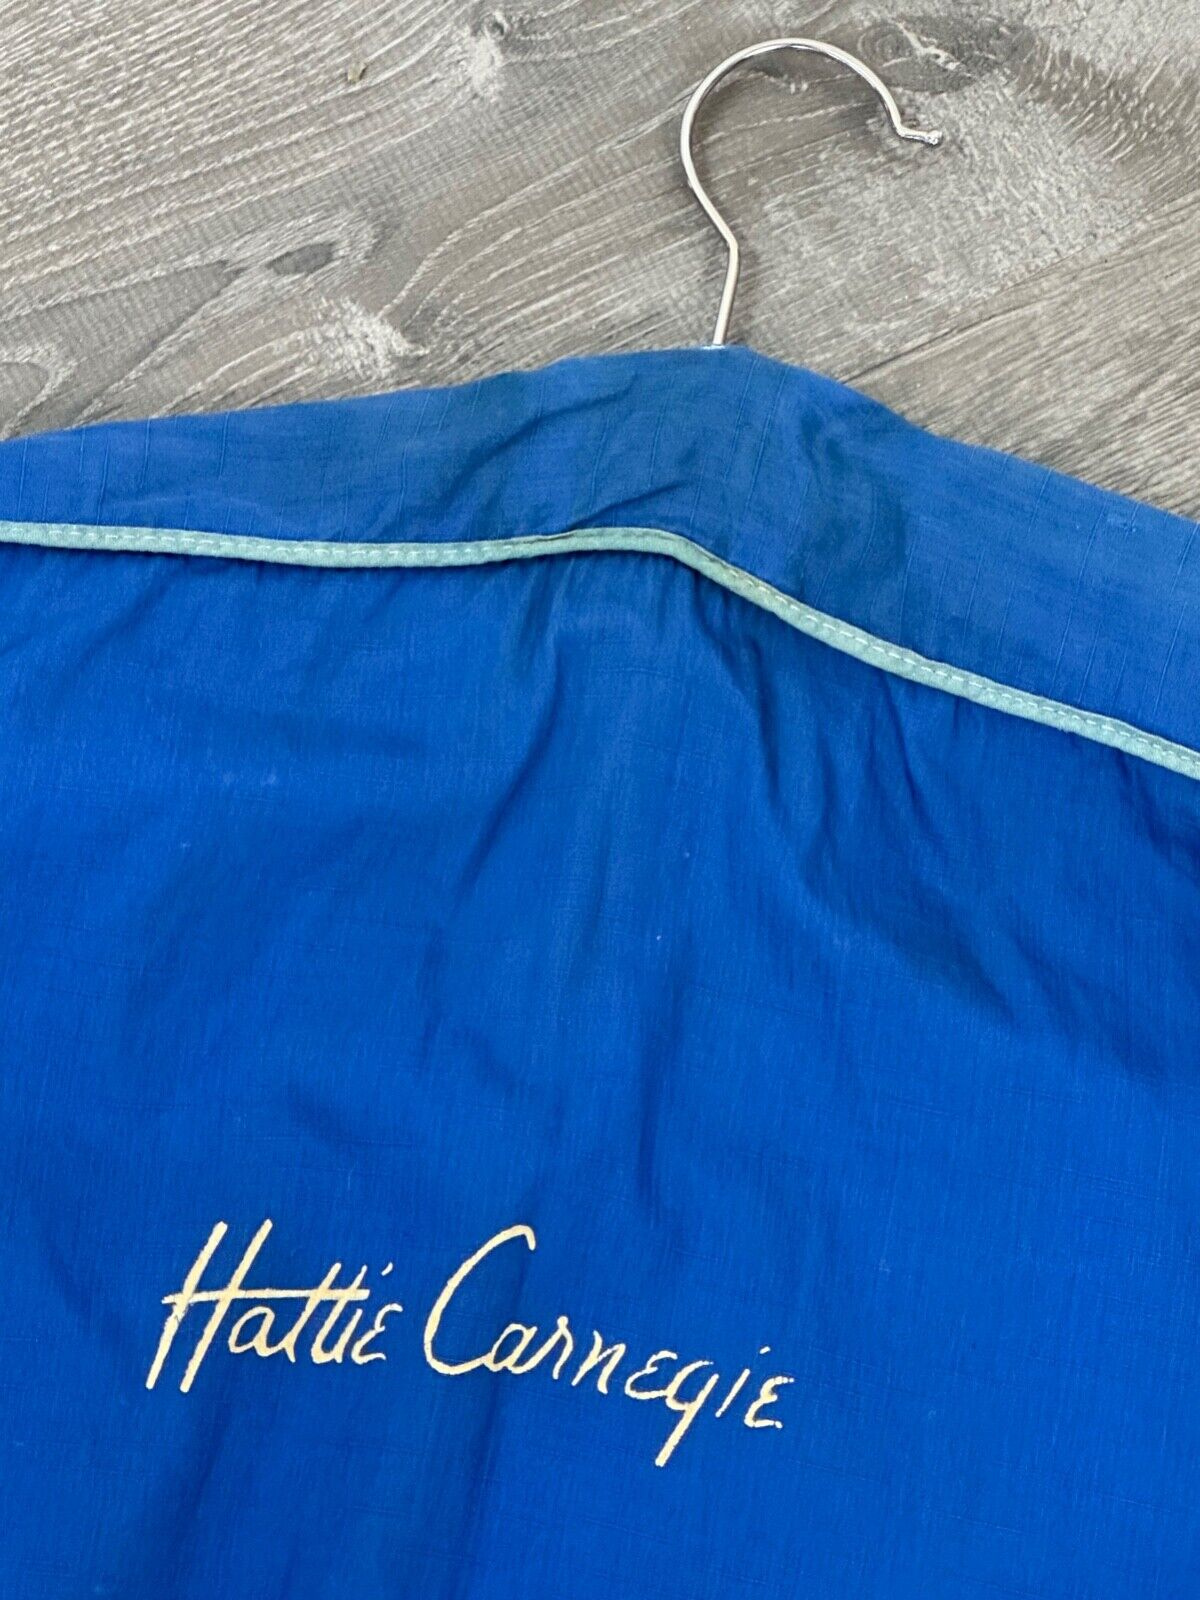 Vintage Royal Blue Hattie Carnegie Garment Bag * 45 x 27